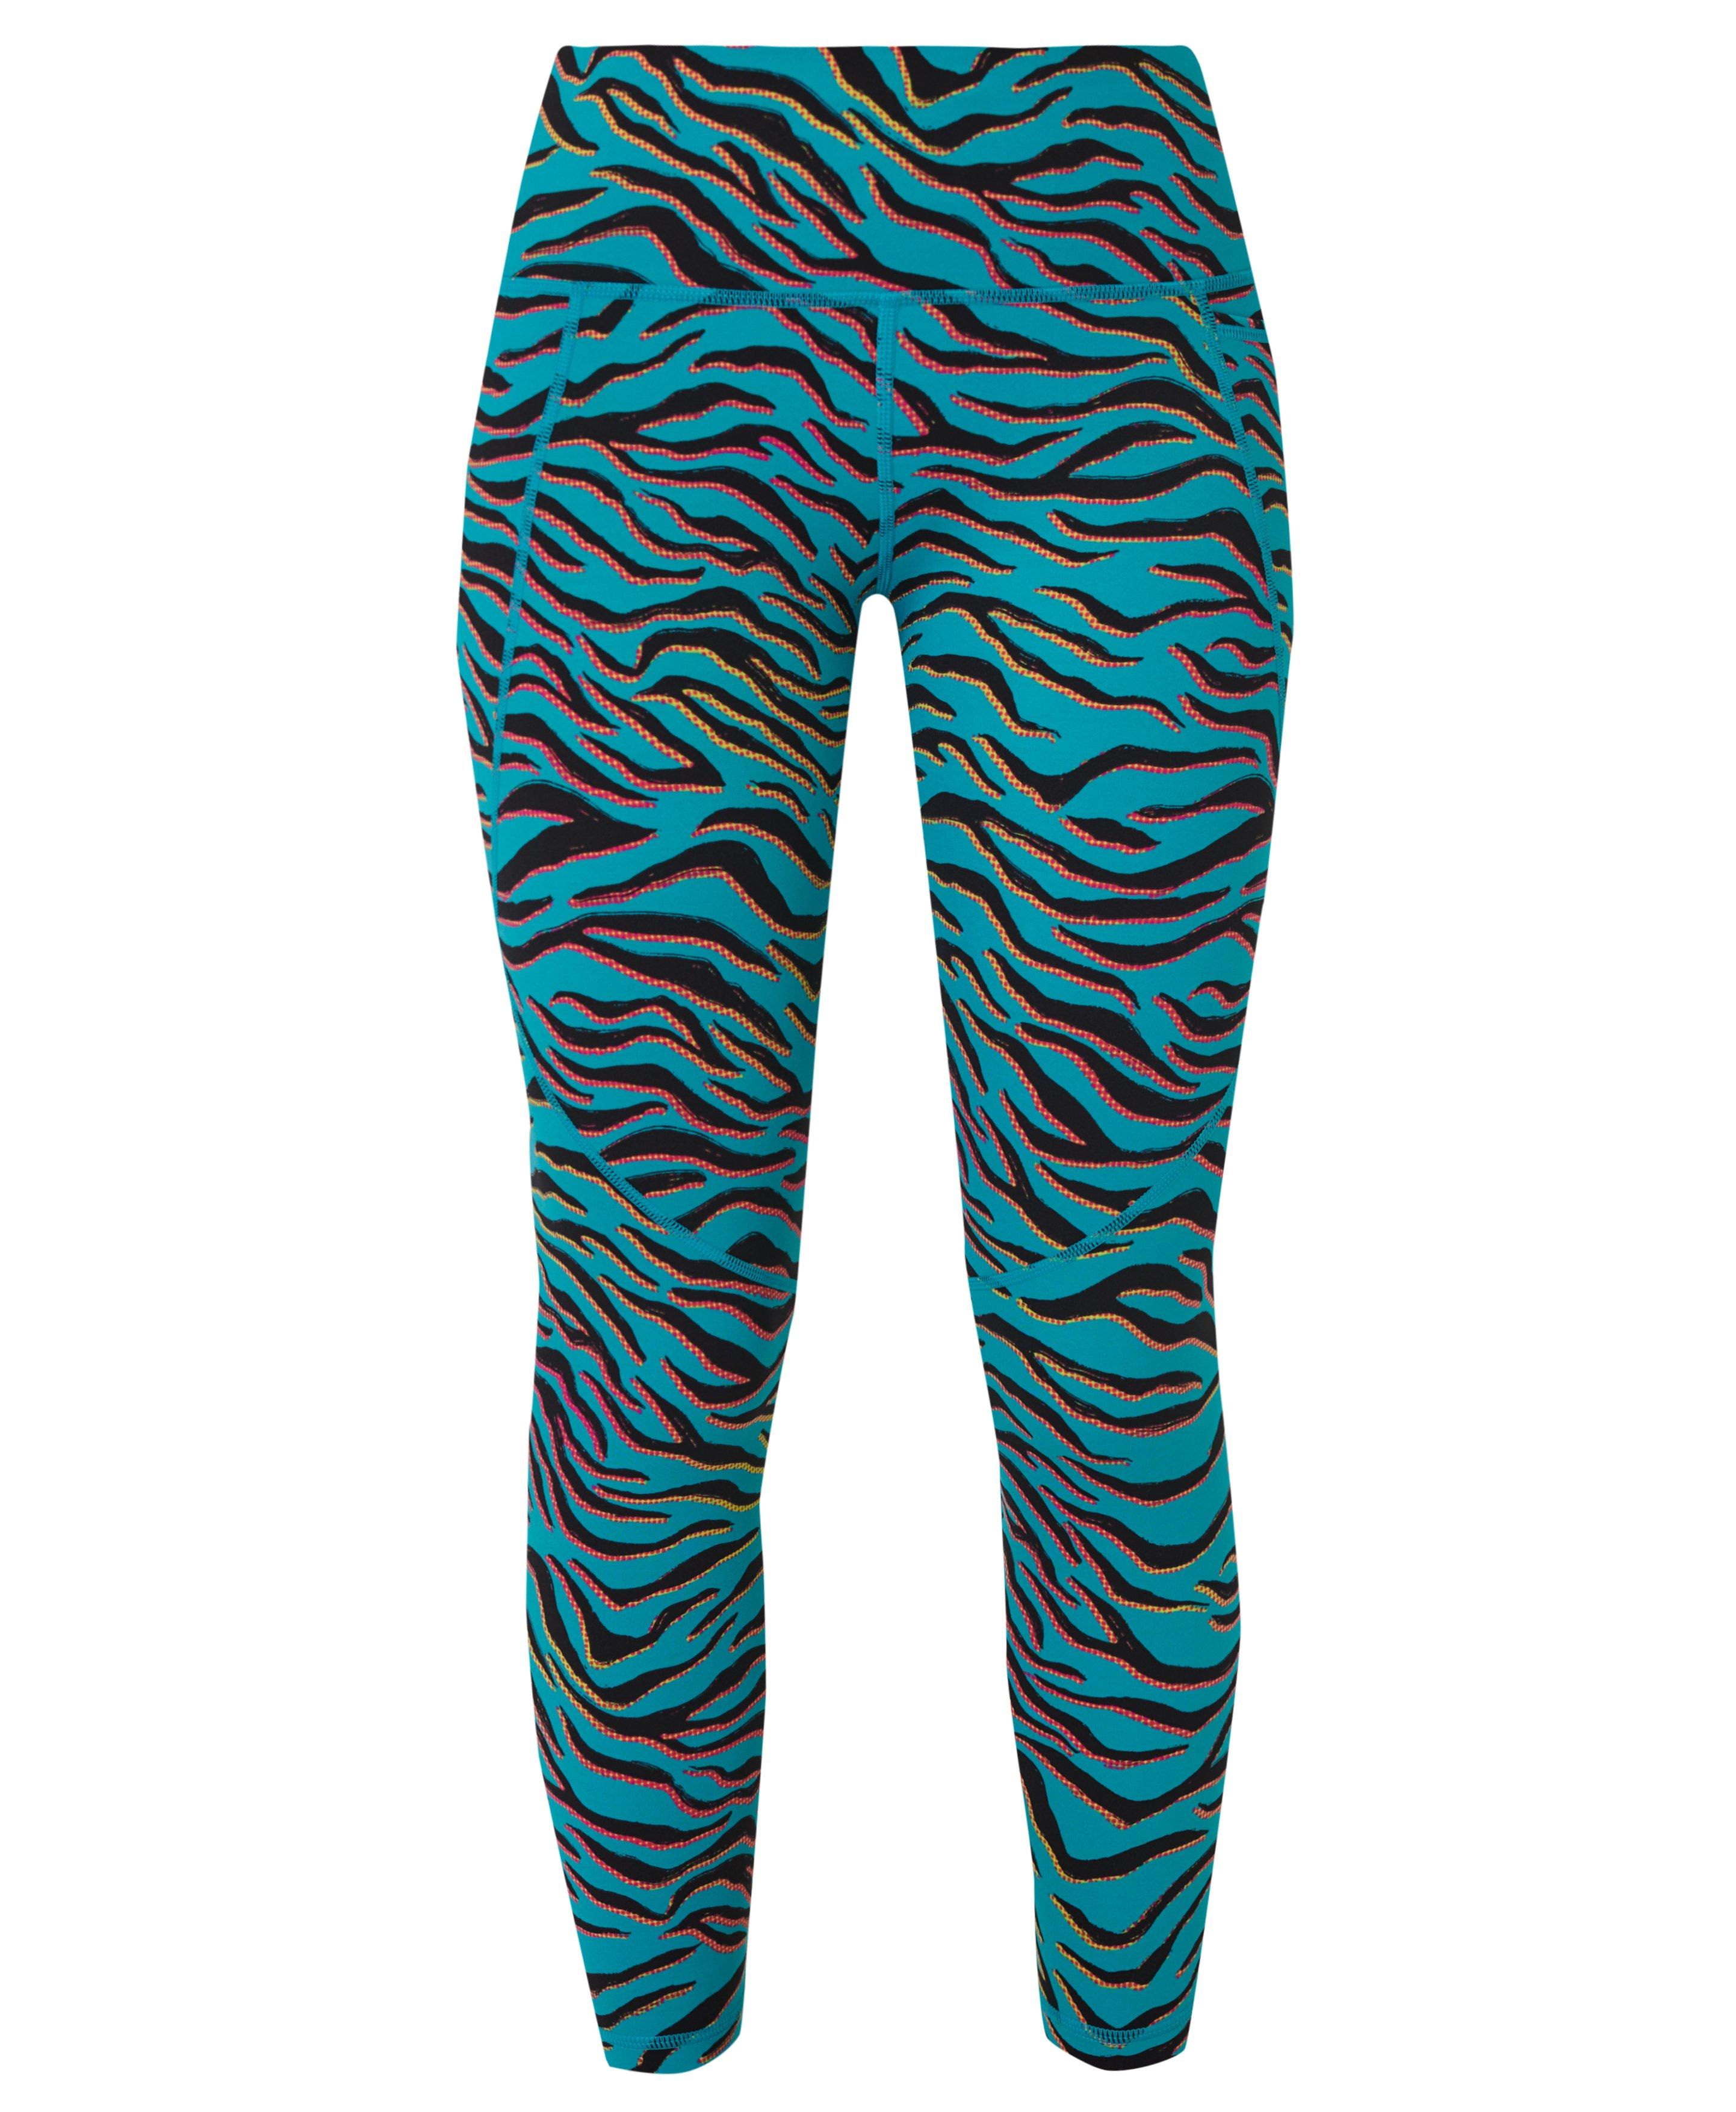 TIGER LEGGINGS Womens Animal Print Leggings Blue Tiger Print